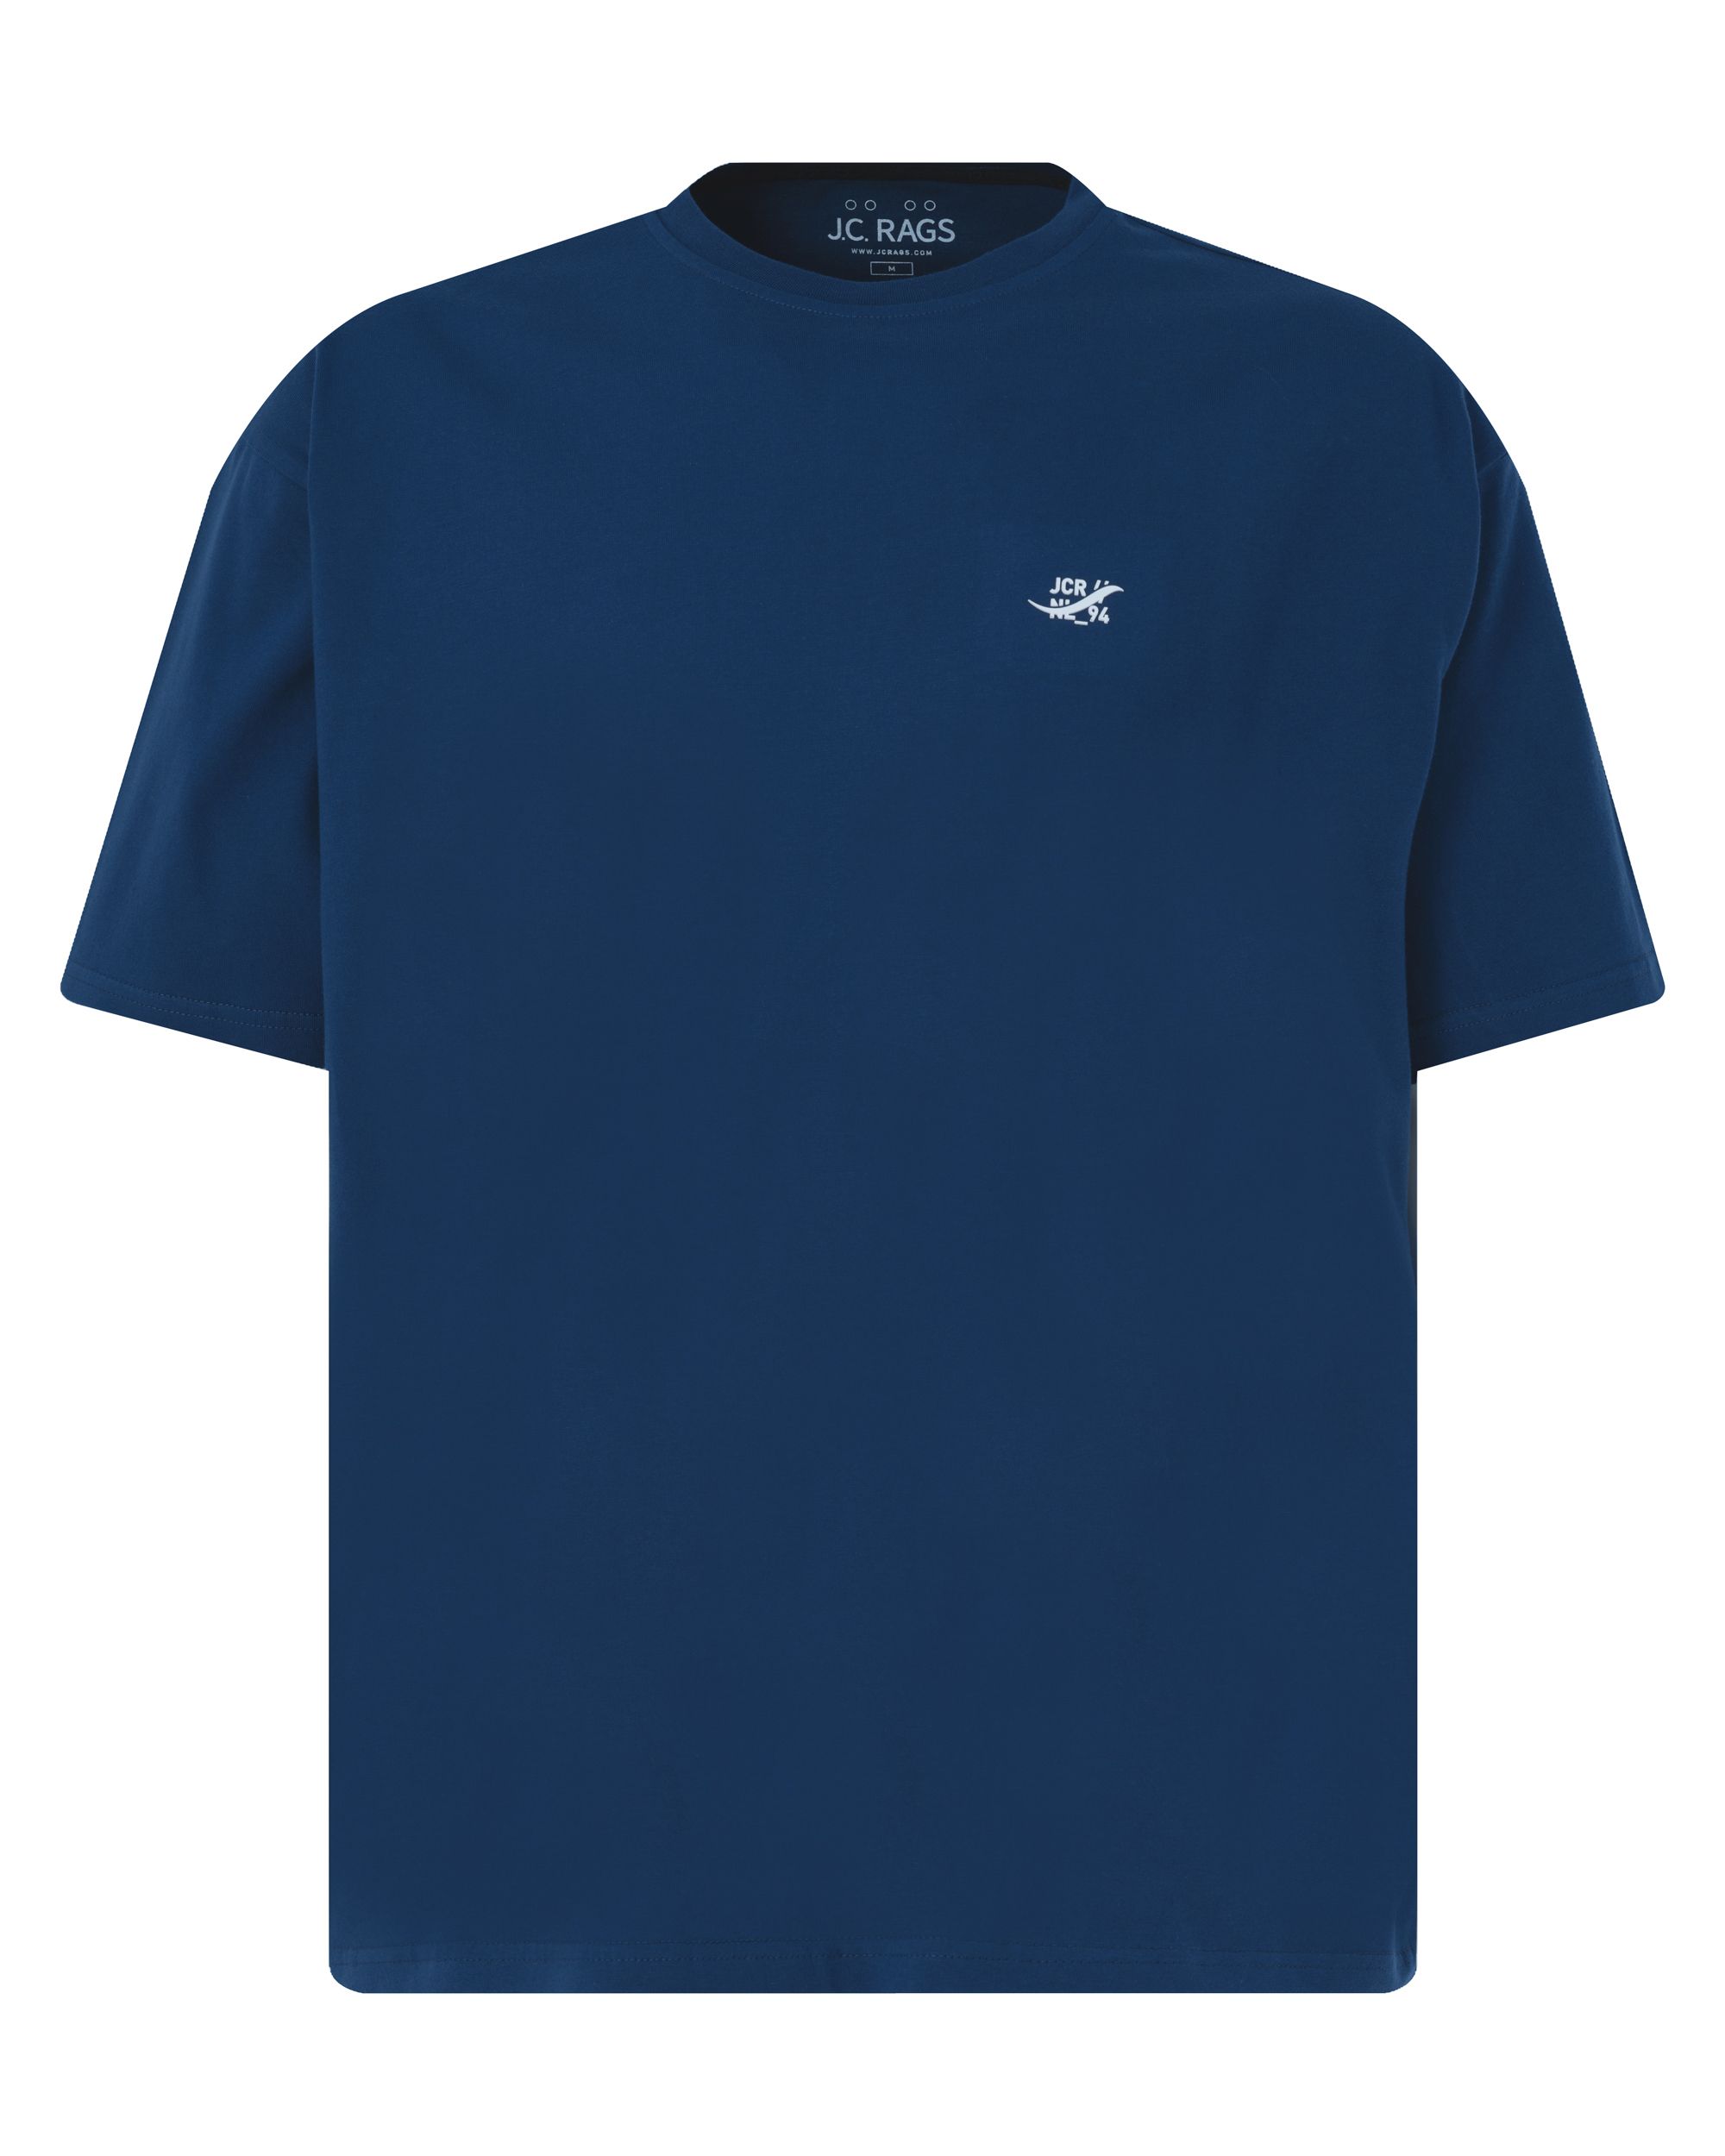 J.C. RAGS Thomas T-shirt KM Blue Depths 089173-001-L